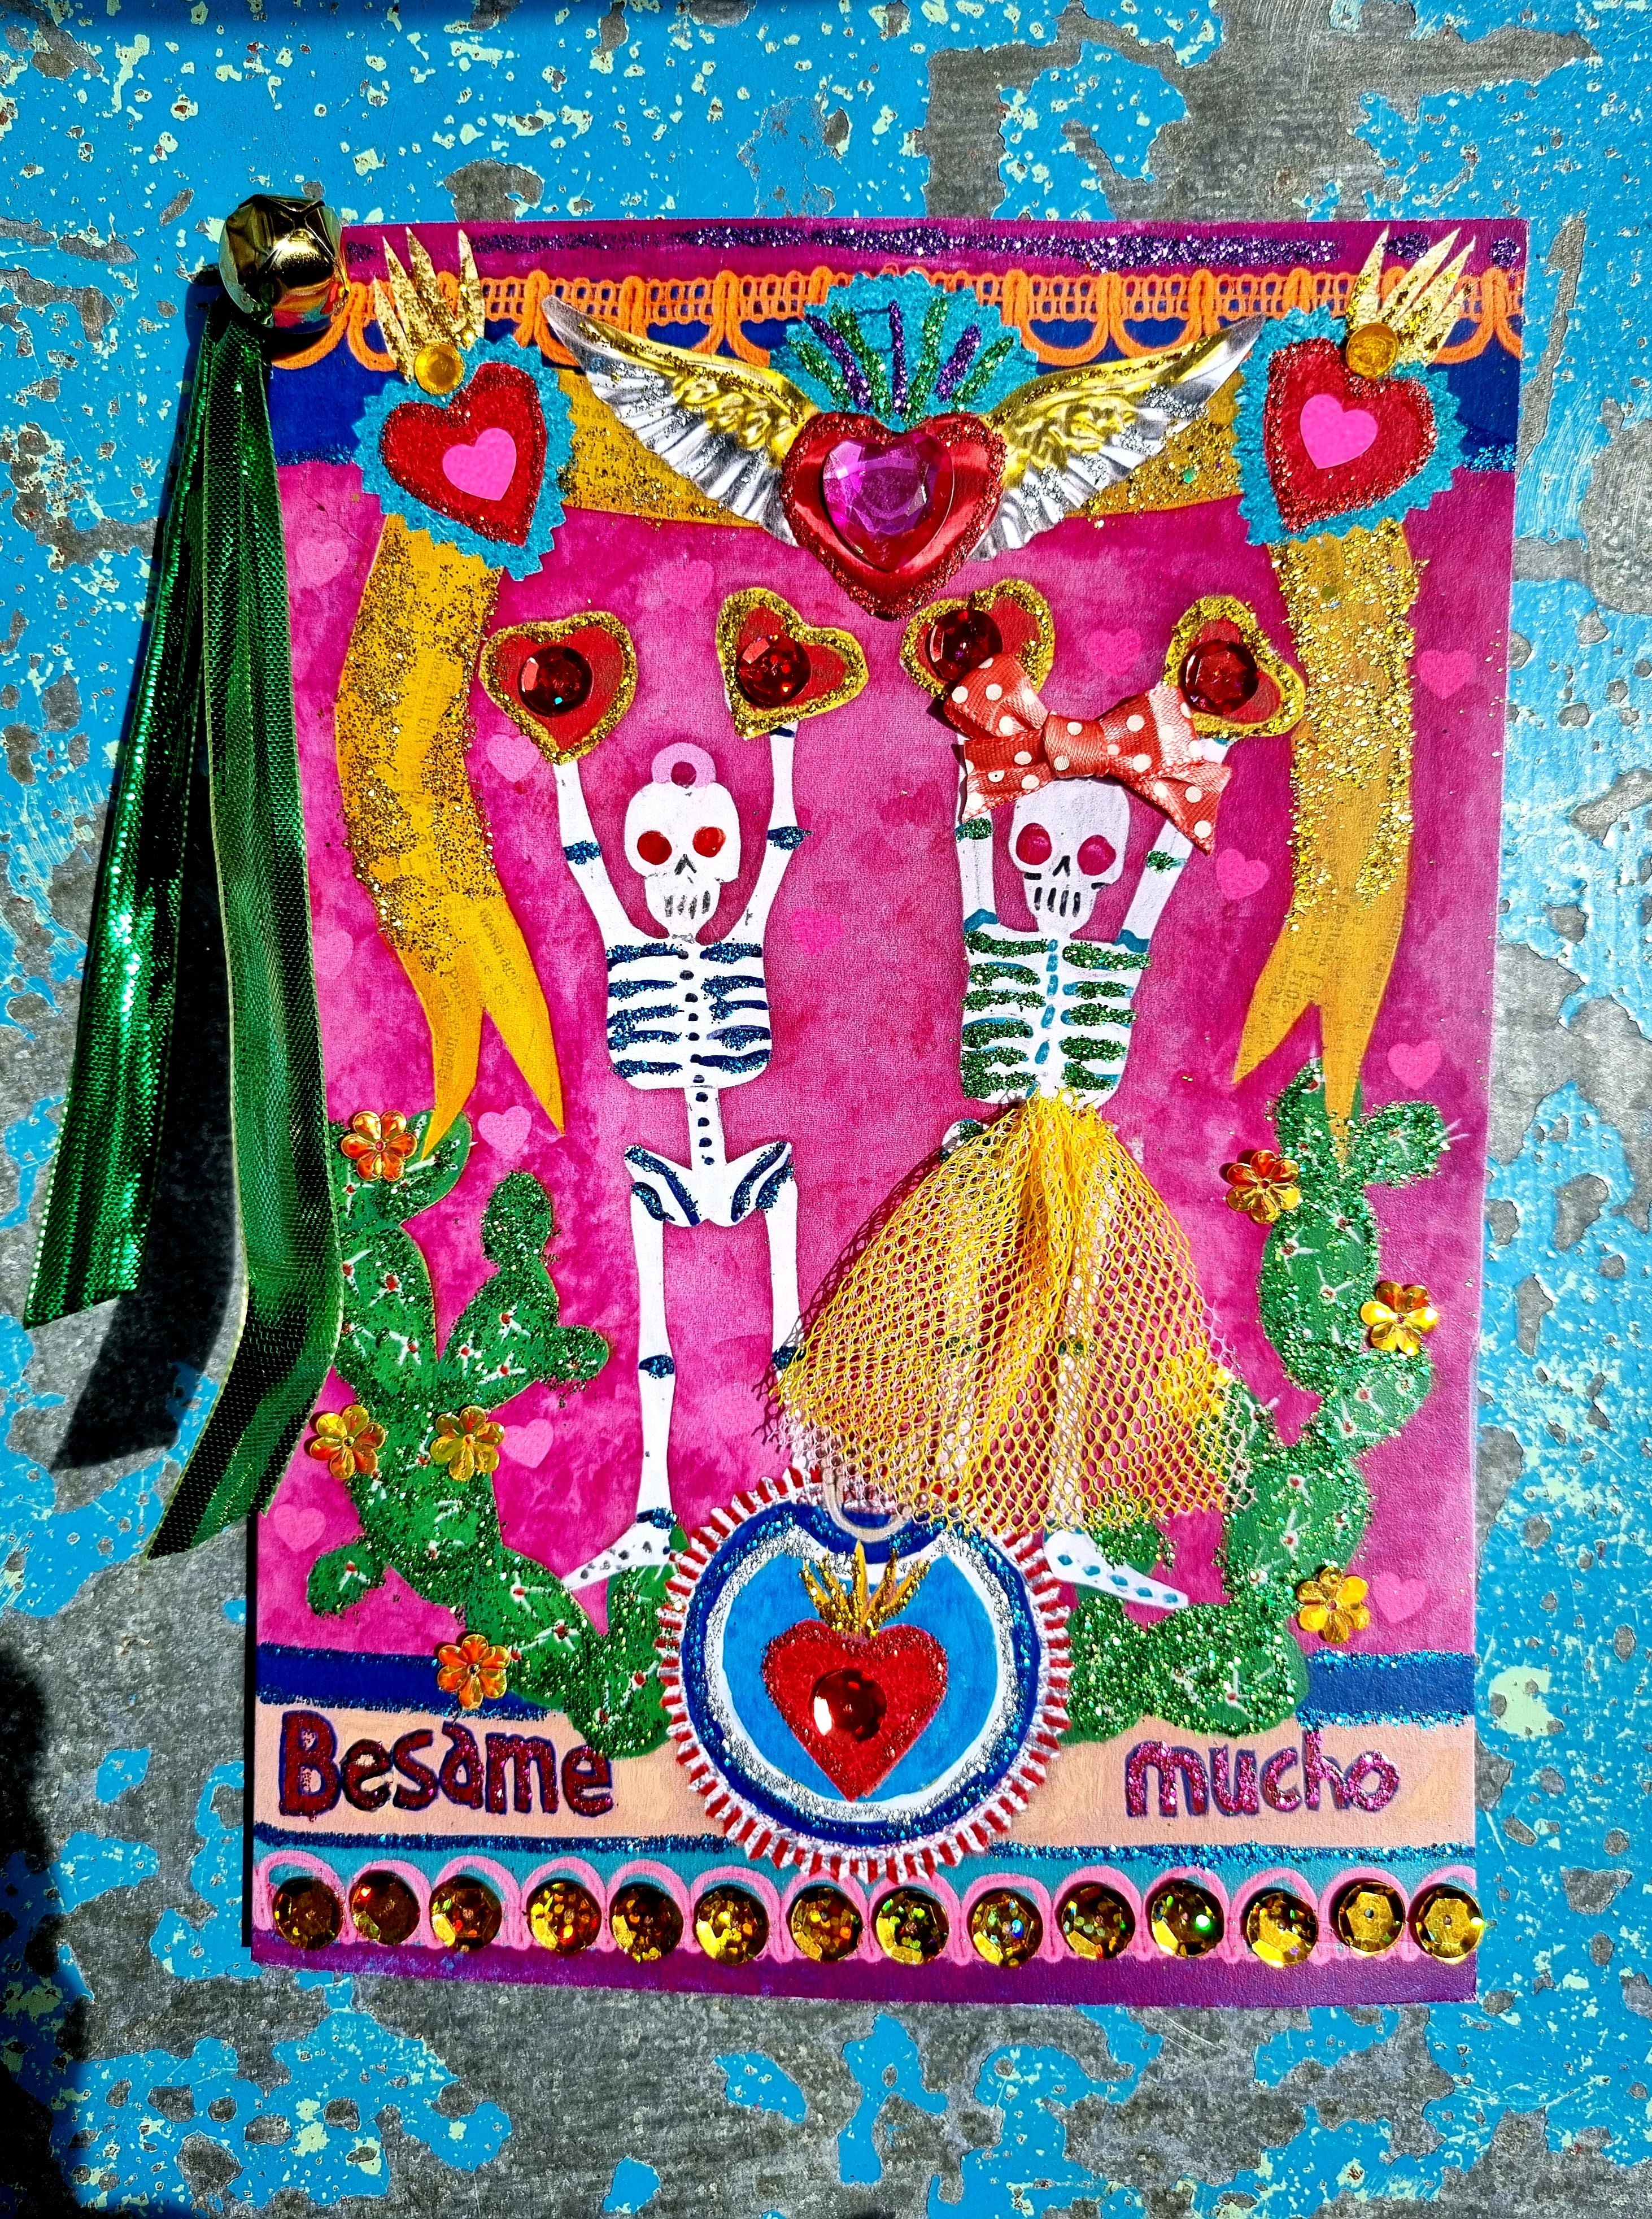 Mexico glittertastic cards